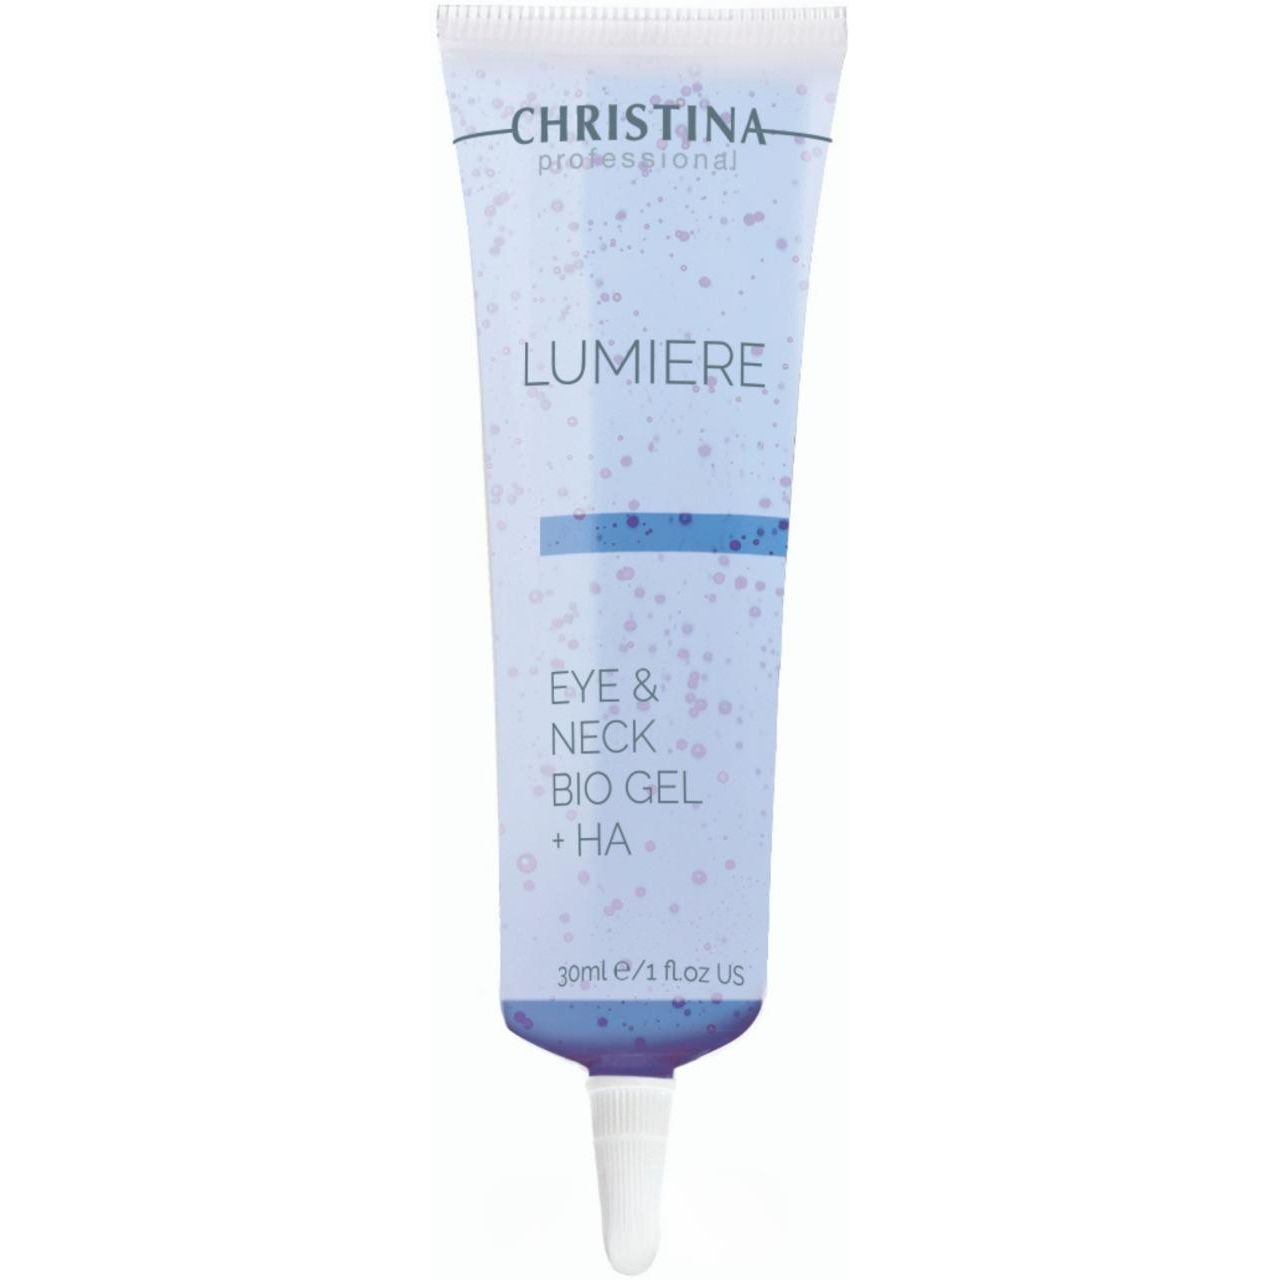 Гель Christina Lumiere Eye & Neck Bio Gel + HA для шкіри довкола очей та шиї 30 мл - фото 1